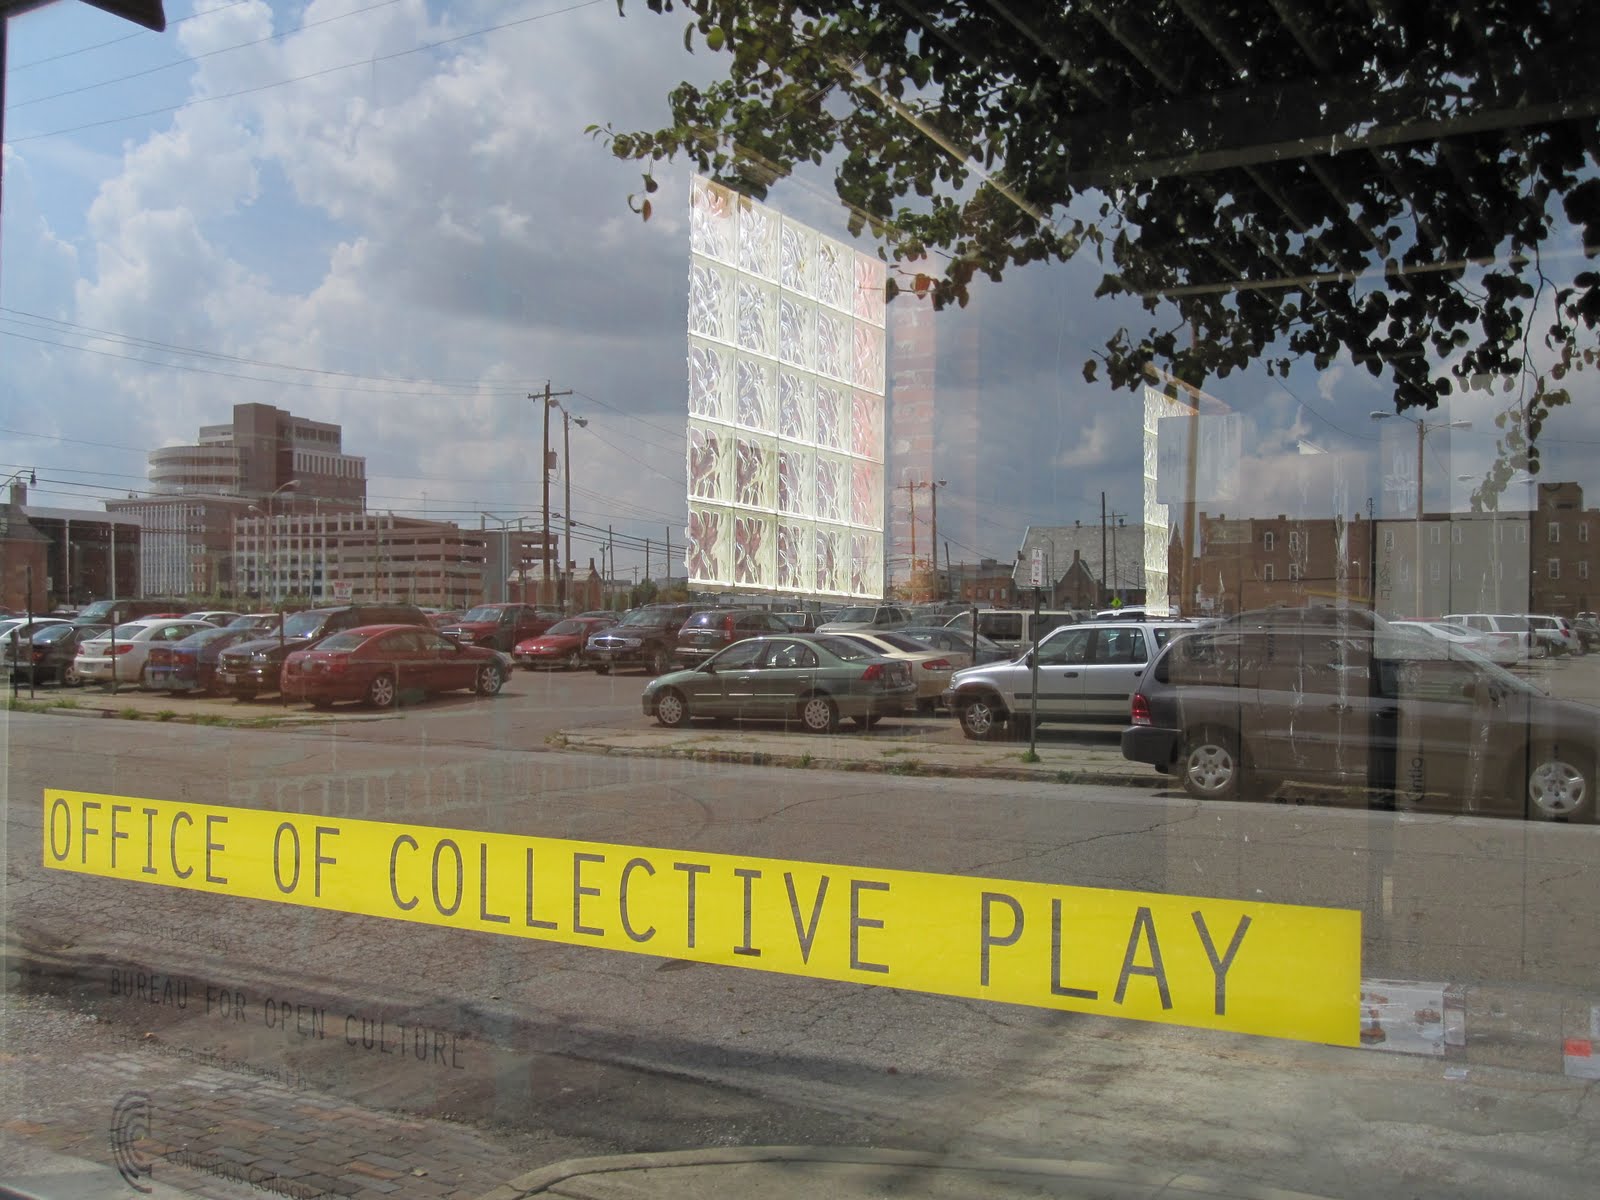 office-of-collective-play-columbus-college-of-art--design-columbus-ohio_7407421858_o.jpg